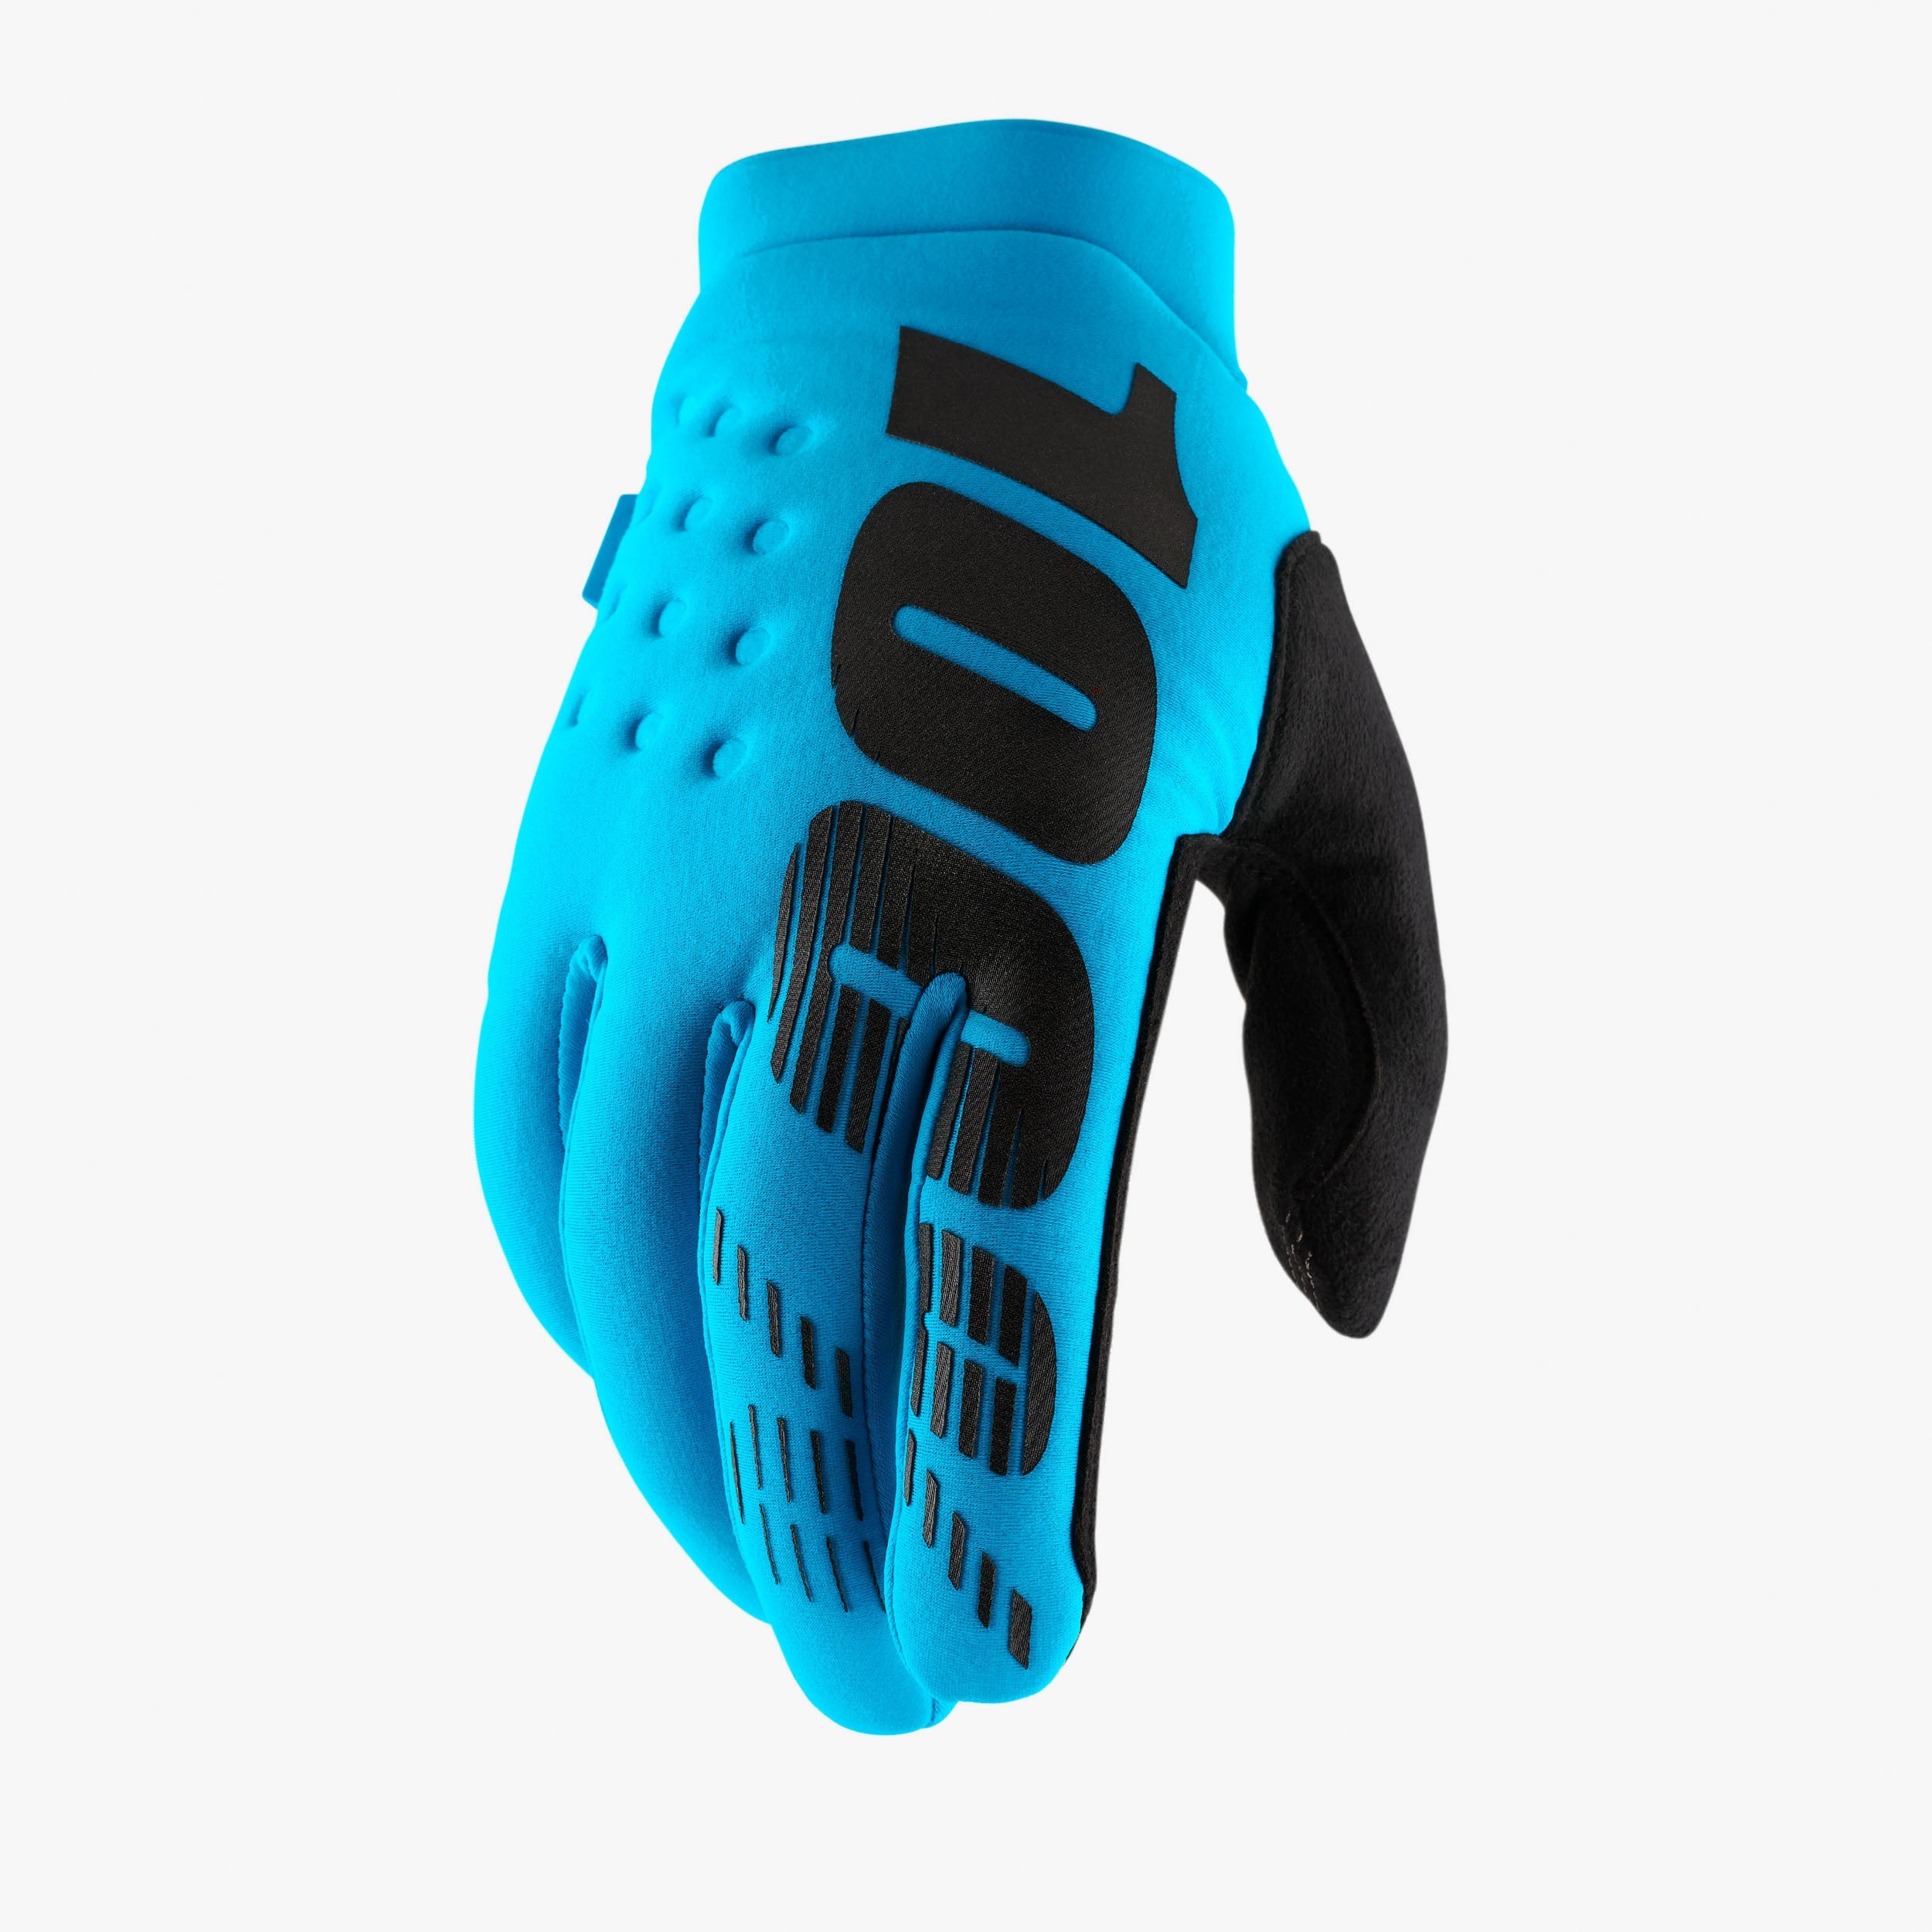 BRISKER Glove - Turquoise